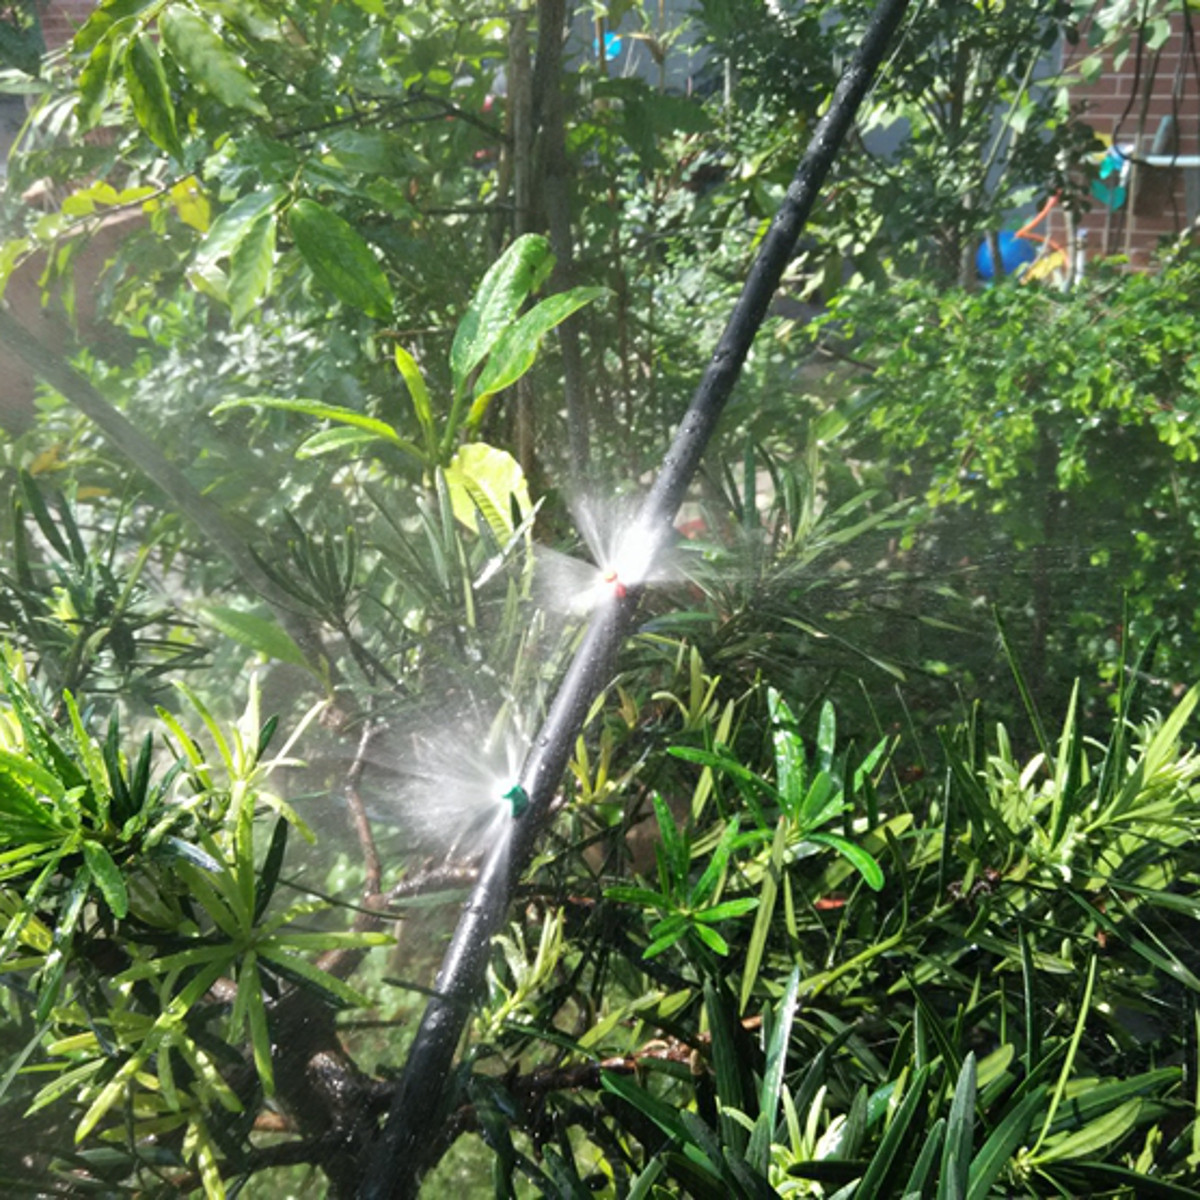 50Pcs-Micro-Garden-Lawn-Water-Spray-Misting-Nozzle-Sprinkler-Irrigation-System-1344634